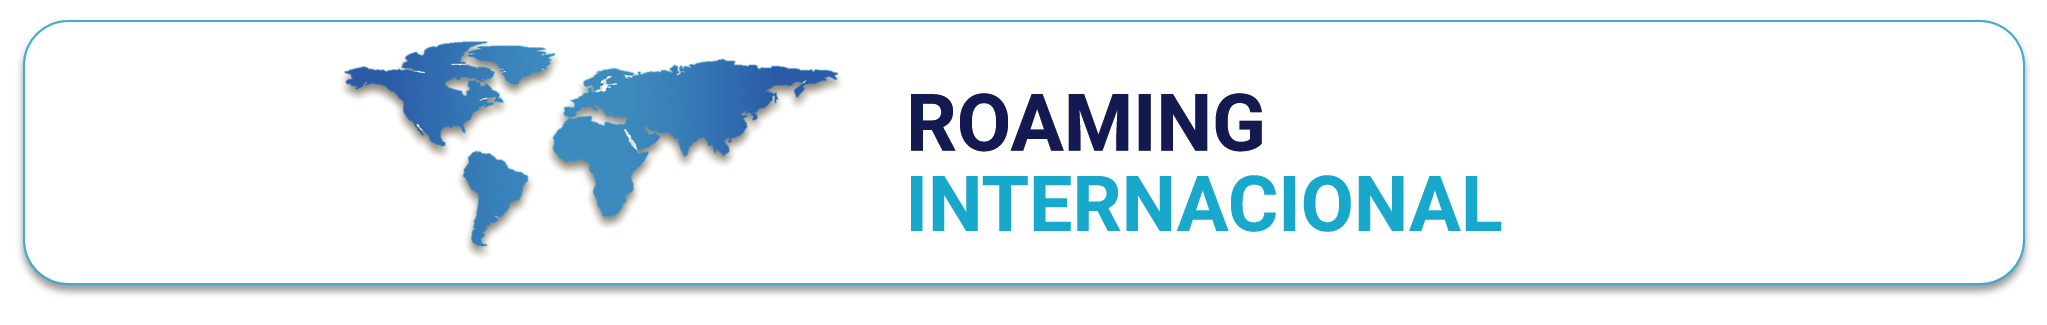 aw-roaming internacional tigo